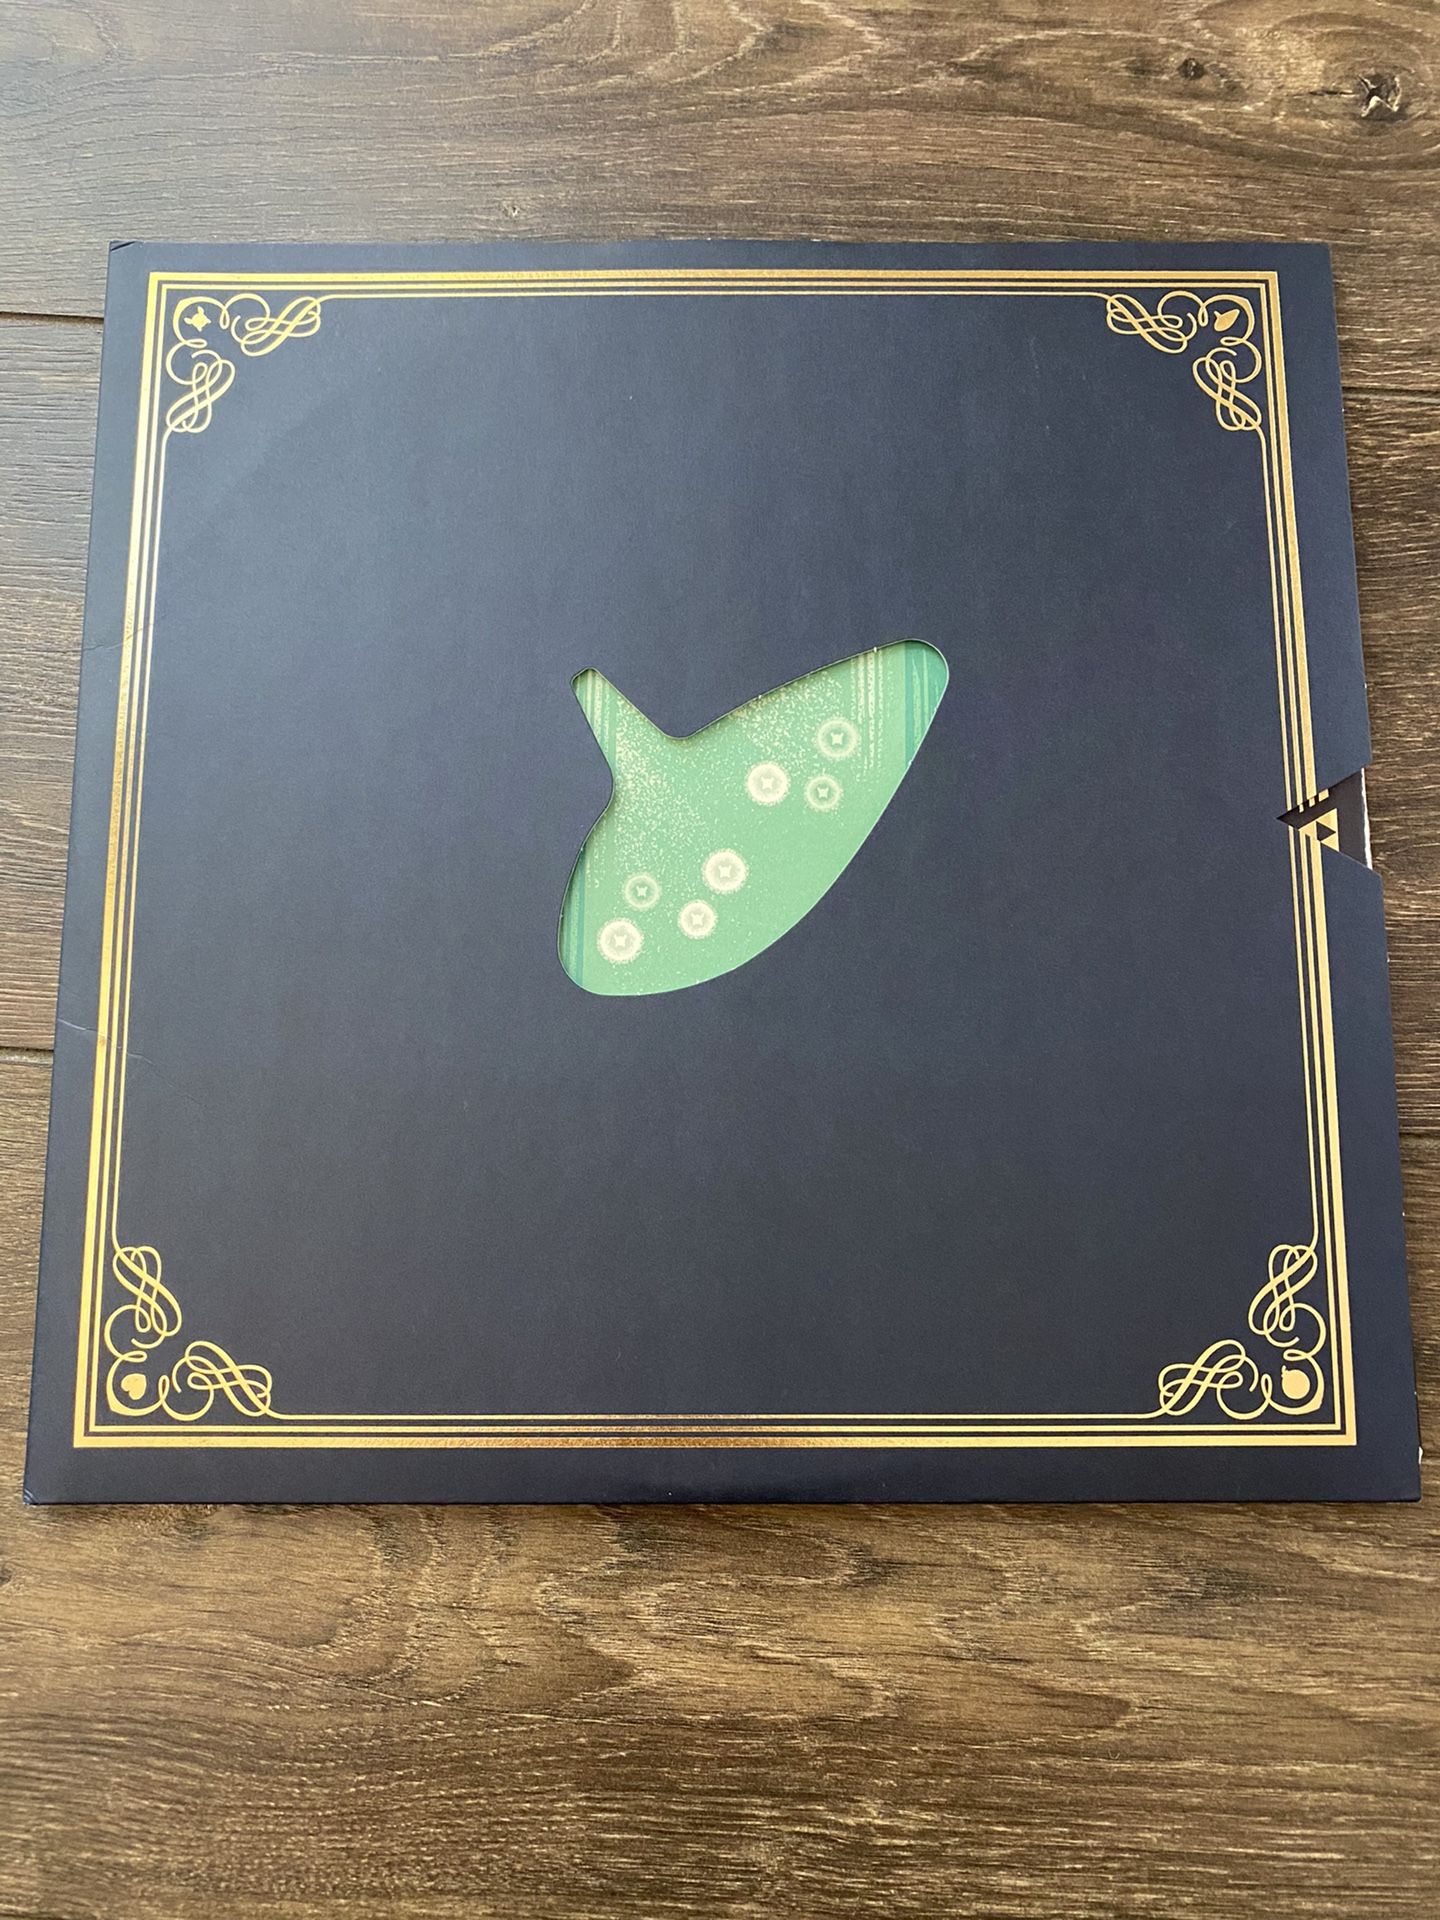 Zelda limited edition vinyl